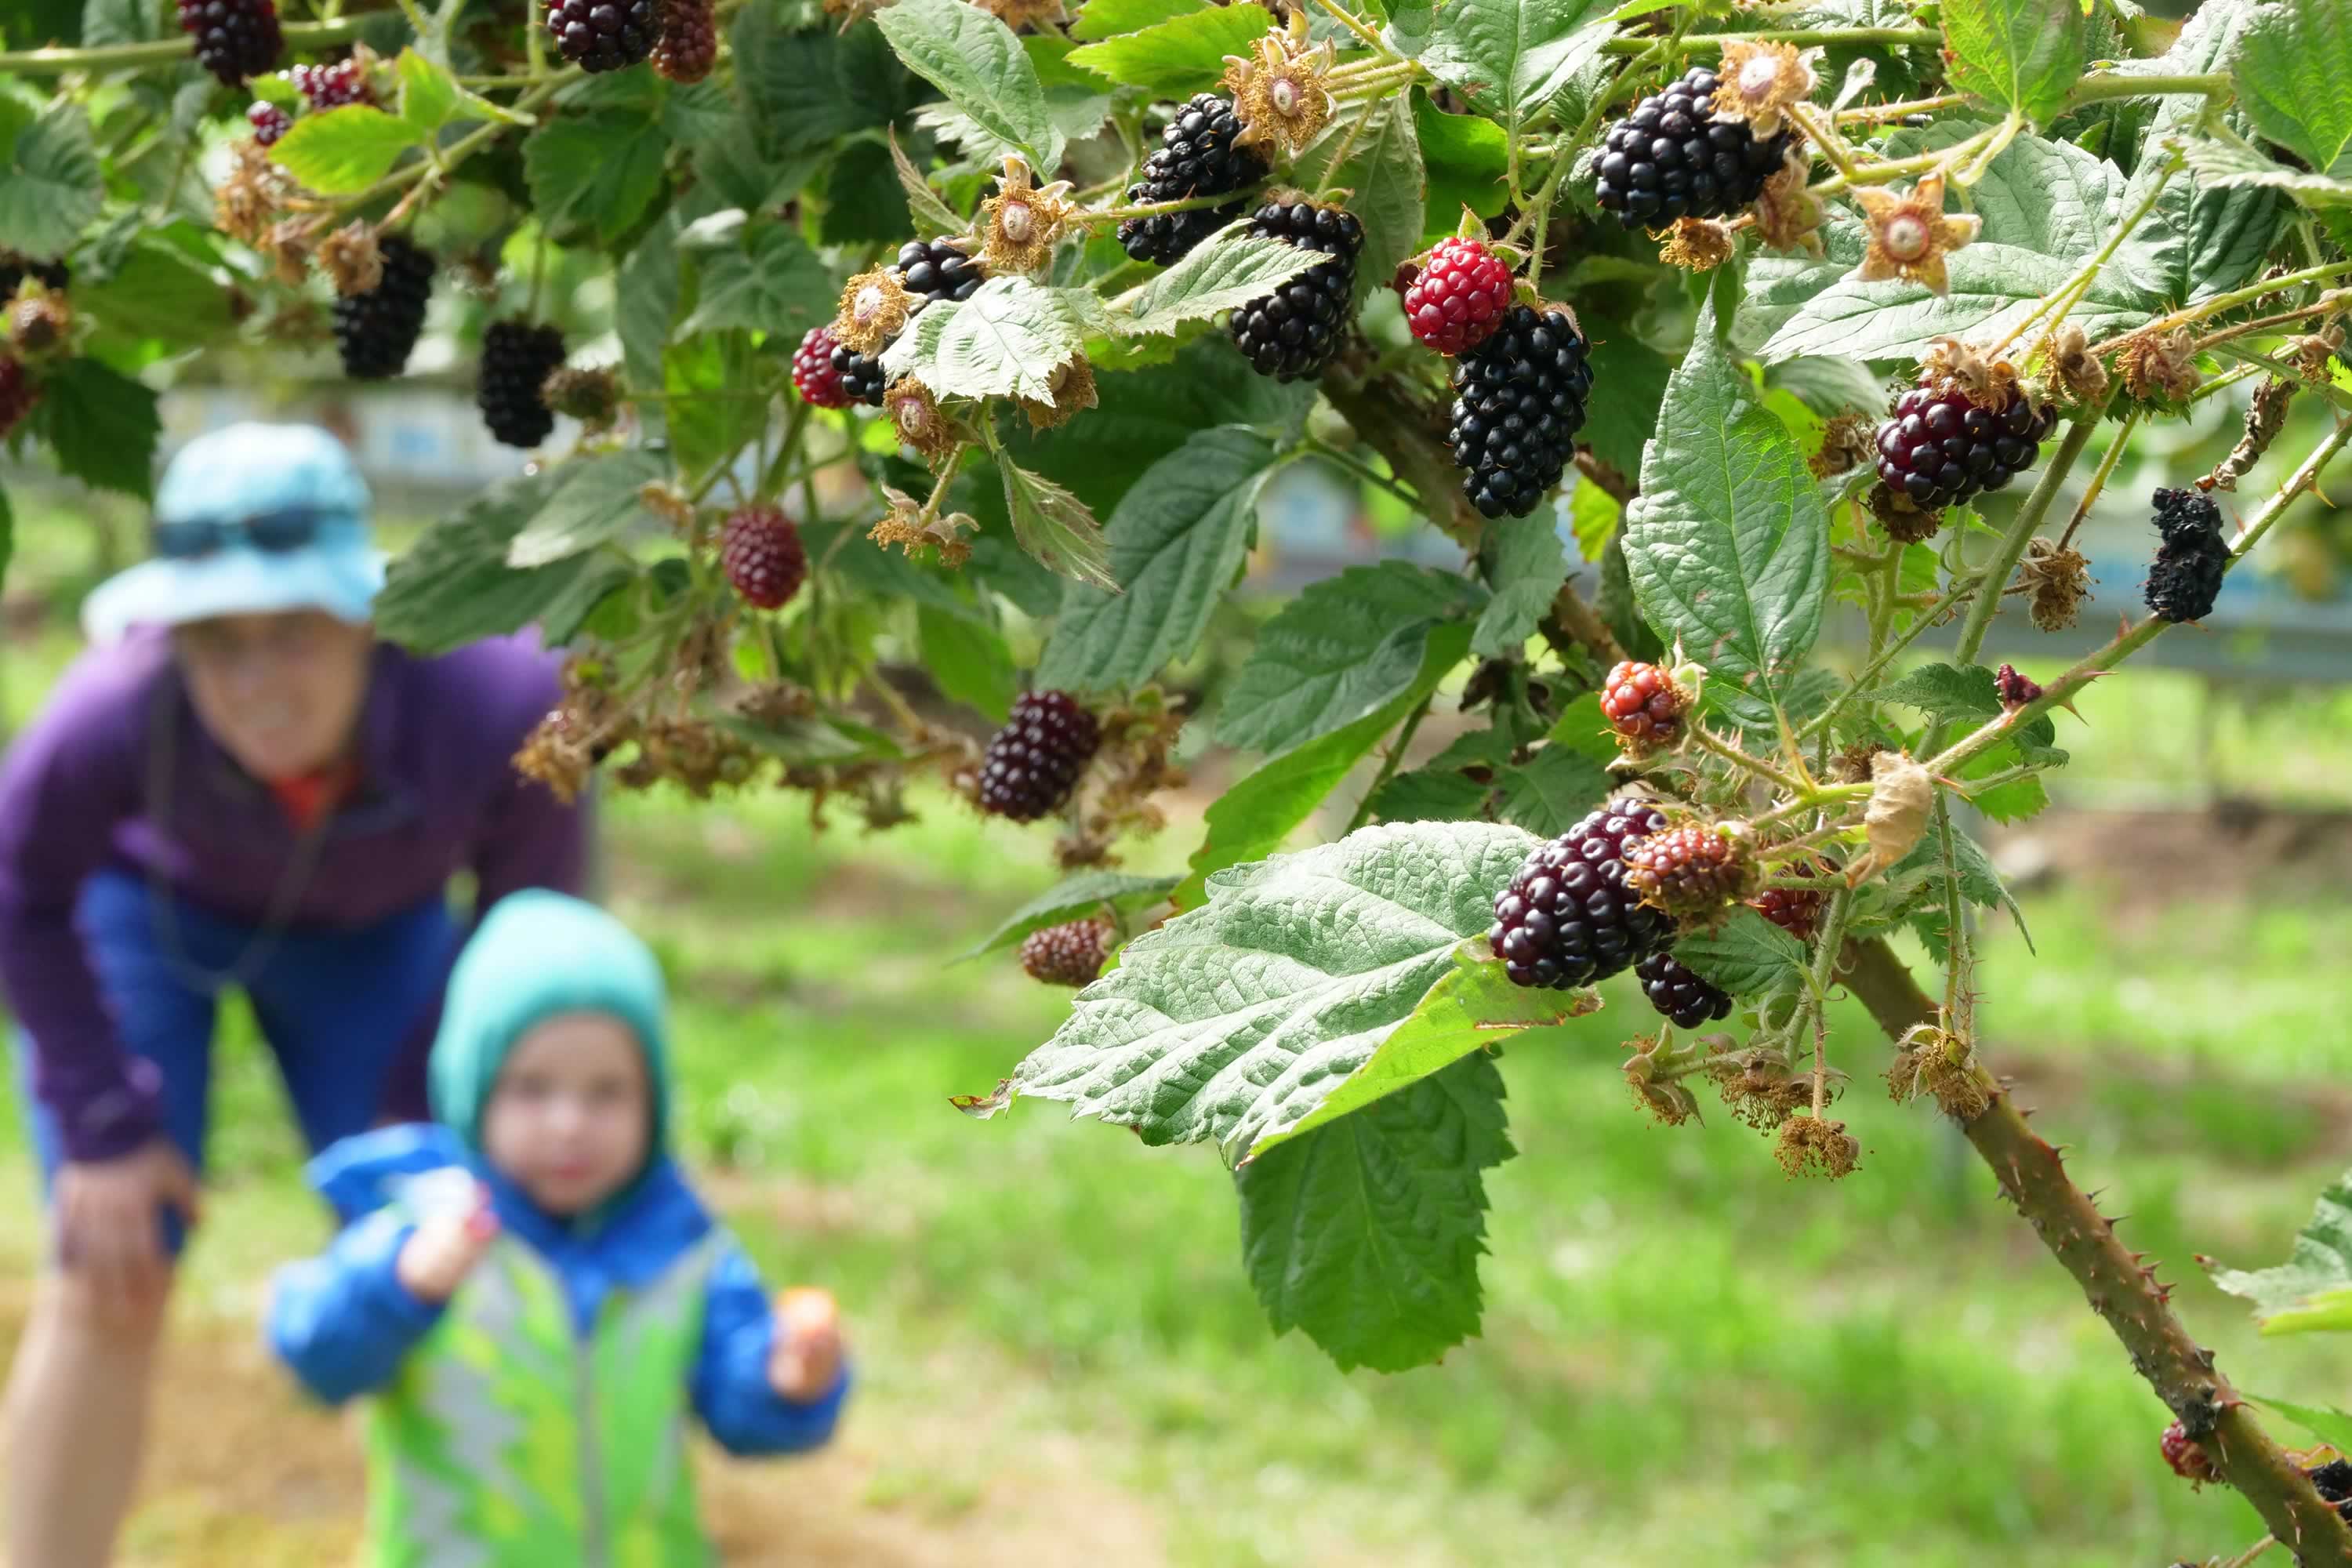 Eating berries at Westerway Raspberry Farm. Photo: Andrew Hughes.